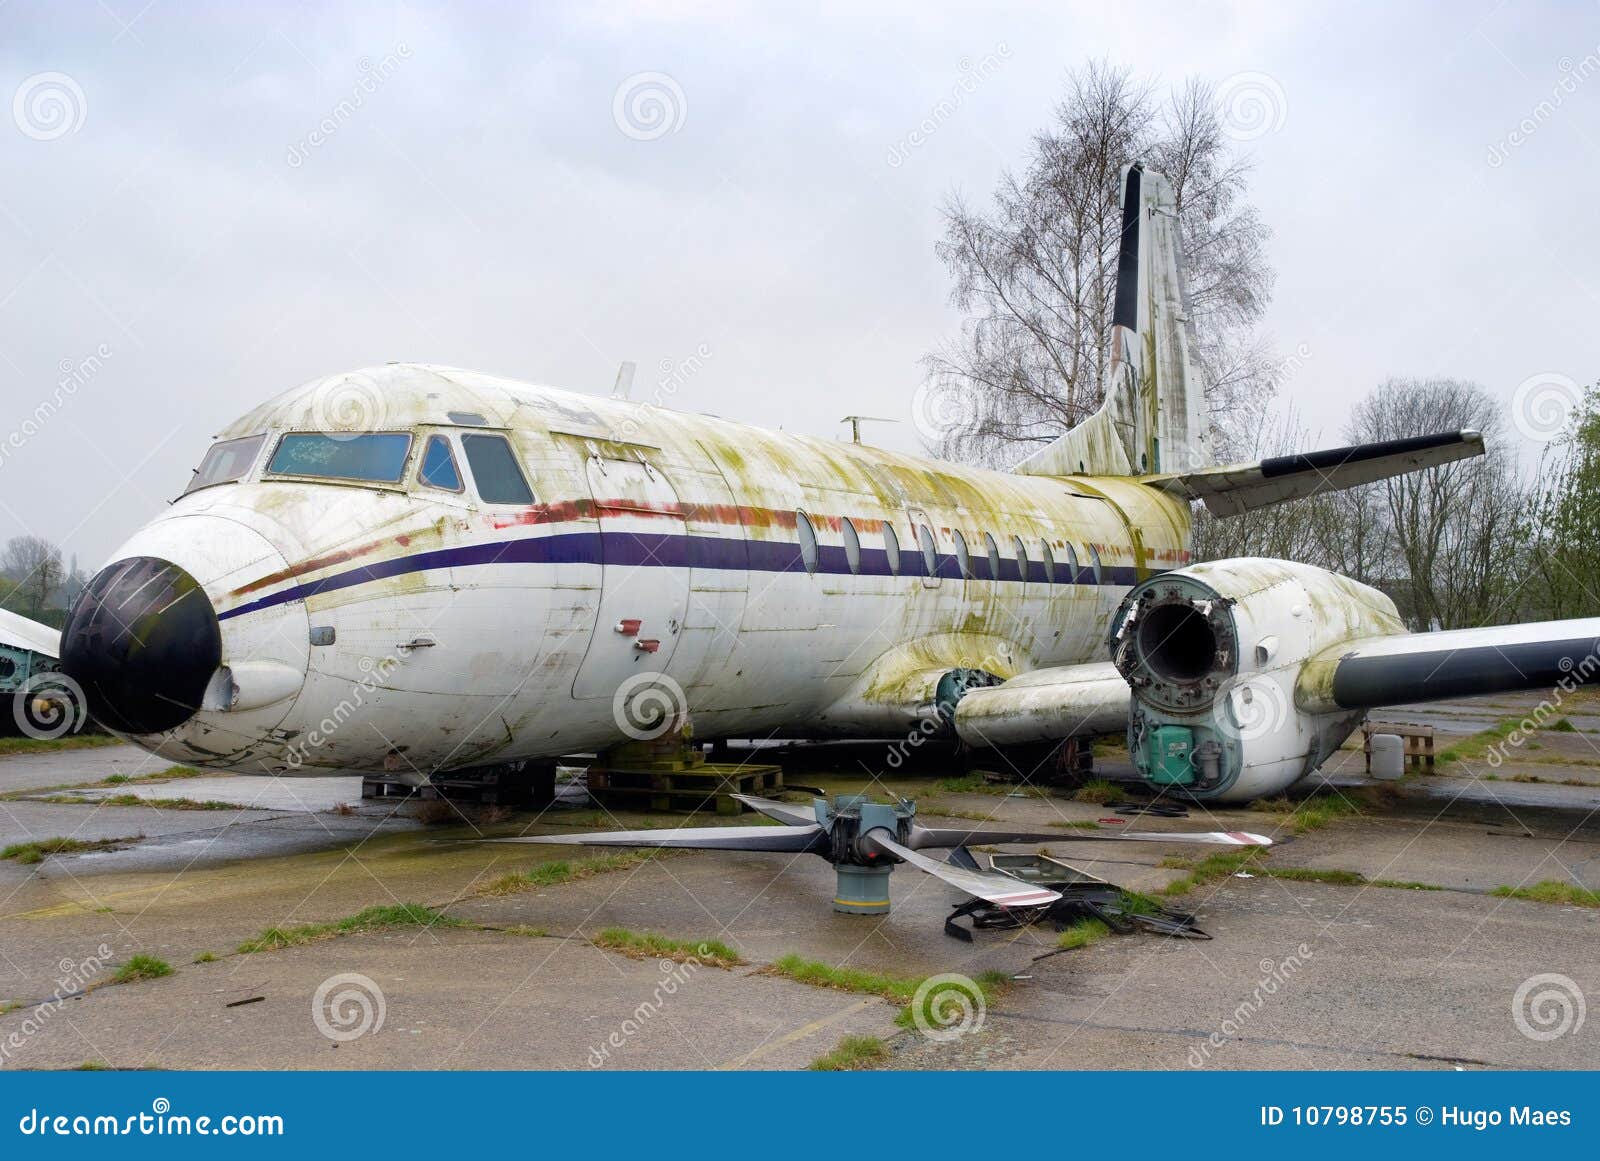 decommissioned vintage airplane